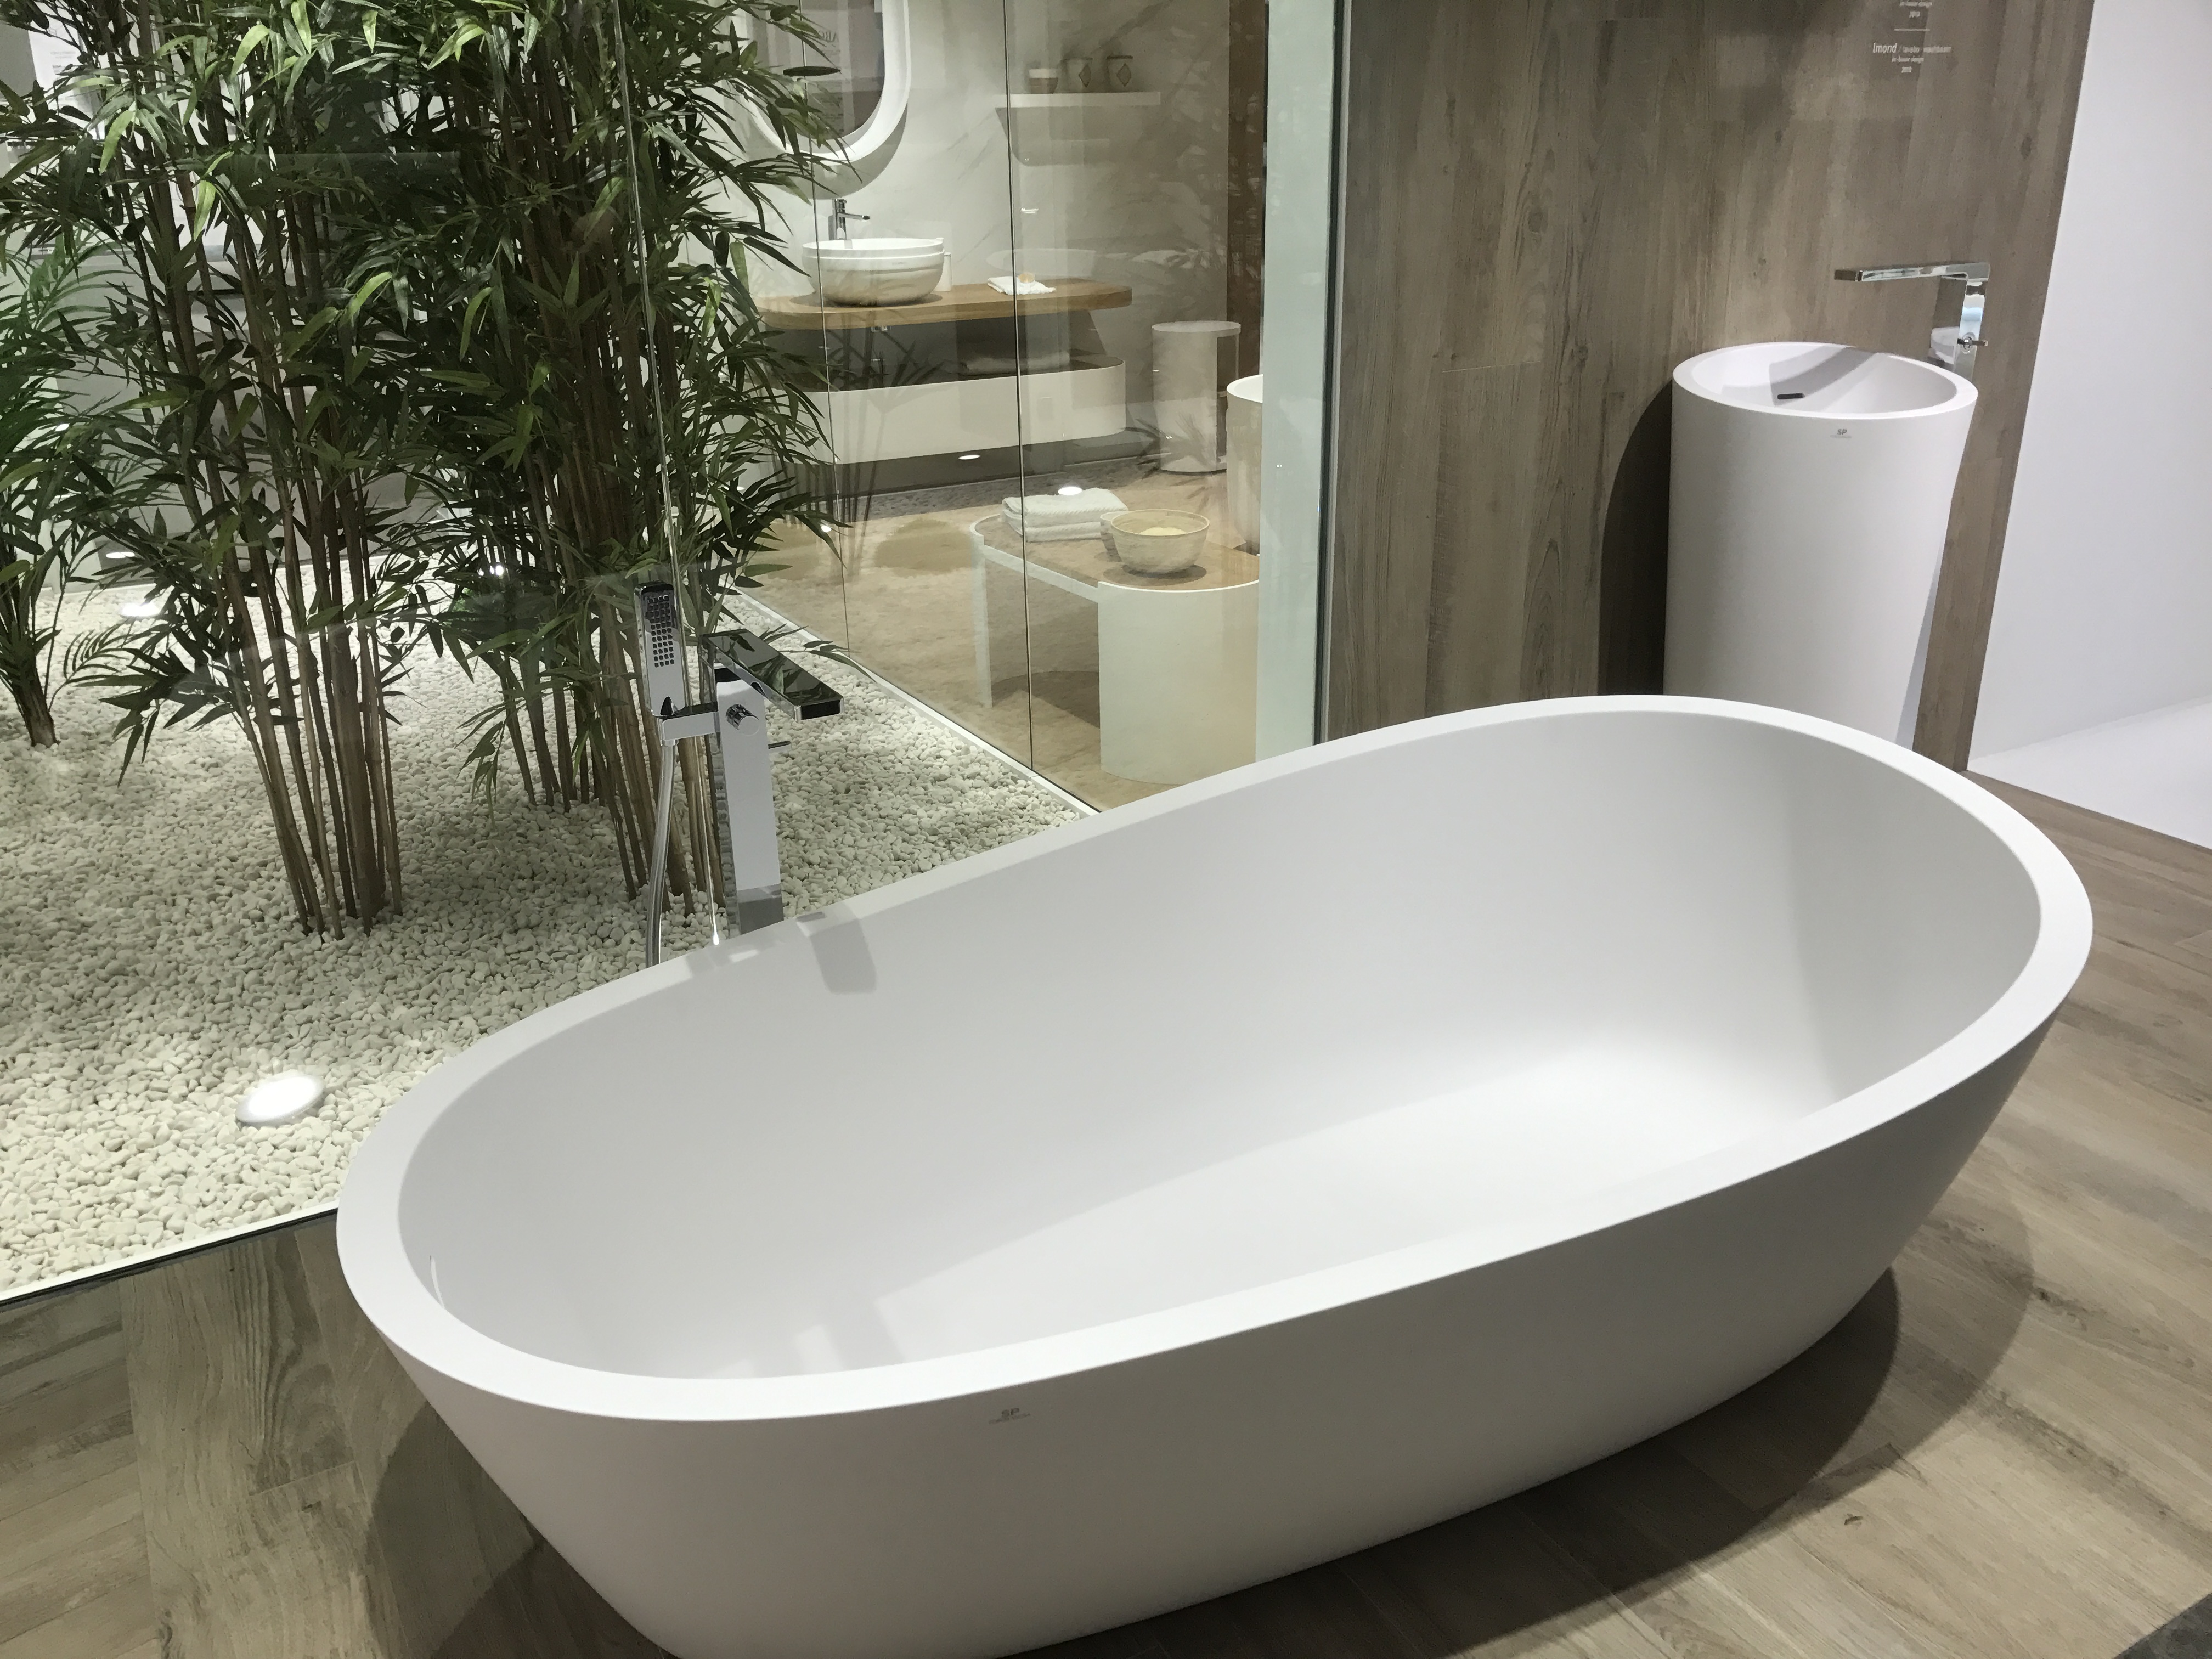 Acrylic stone round shaped bath tub - KRION